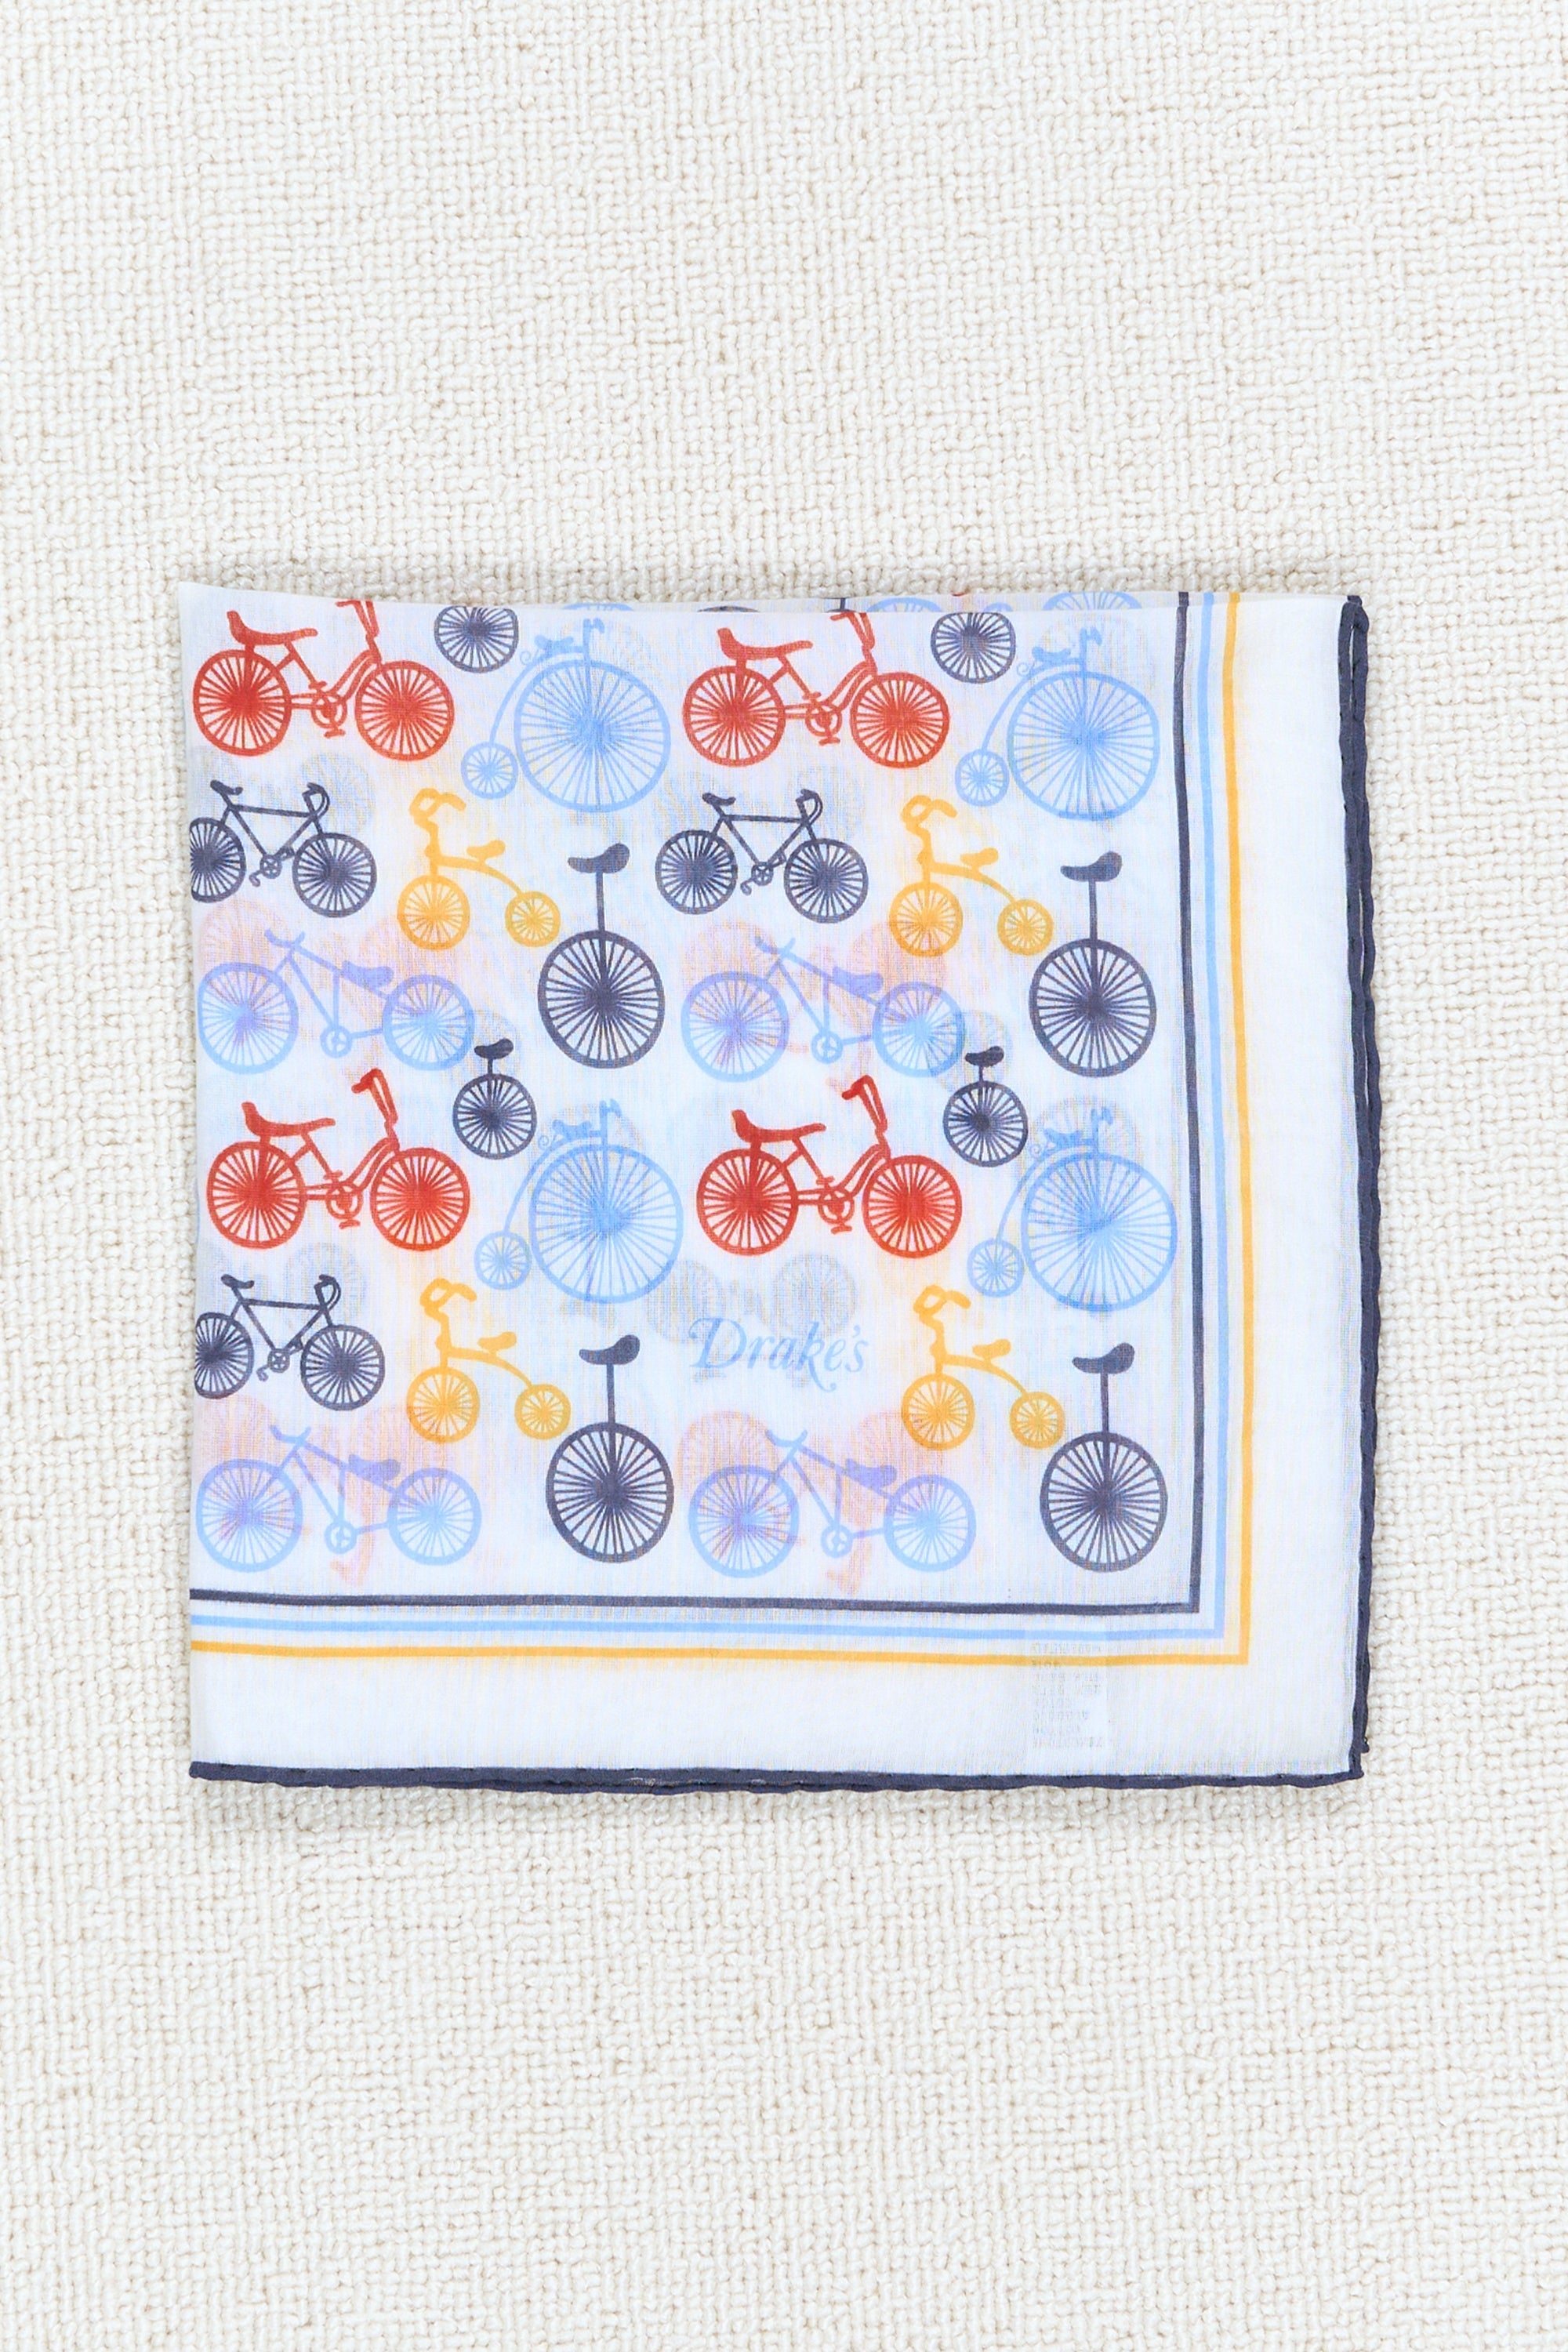 Drake's White with Red/Blue/Yellow Bike Pattern Cotton/Silk Pocket Square